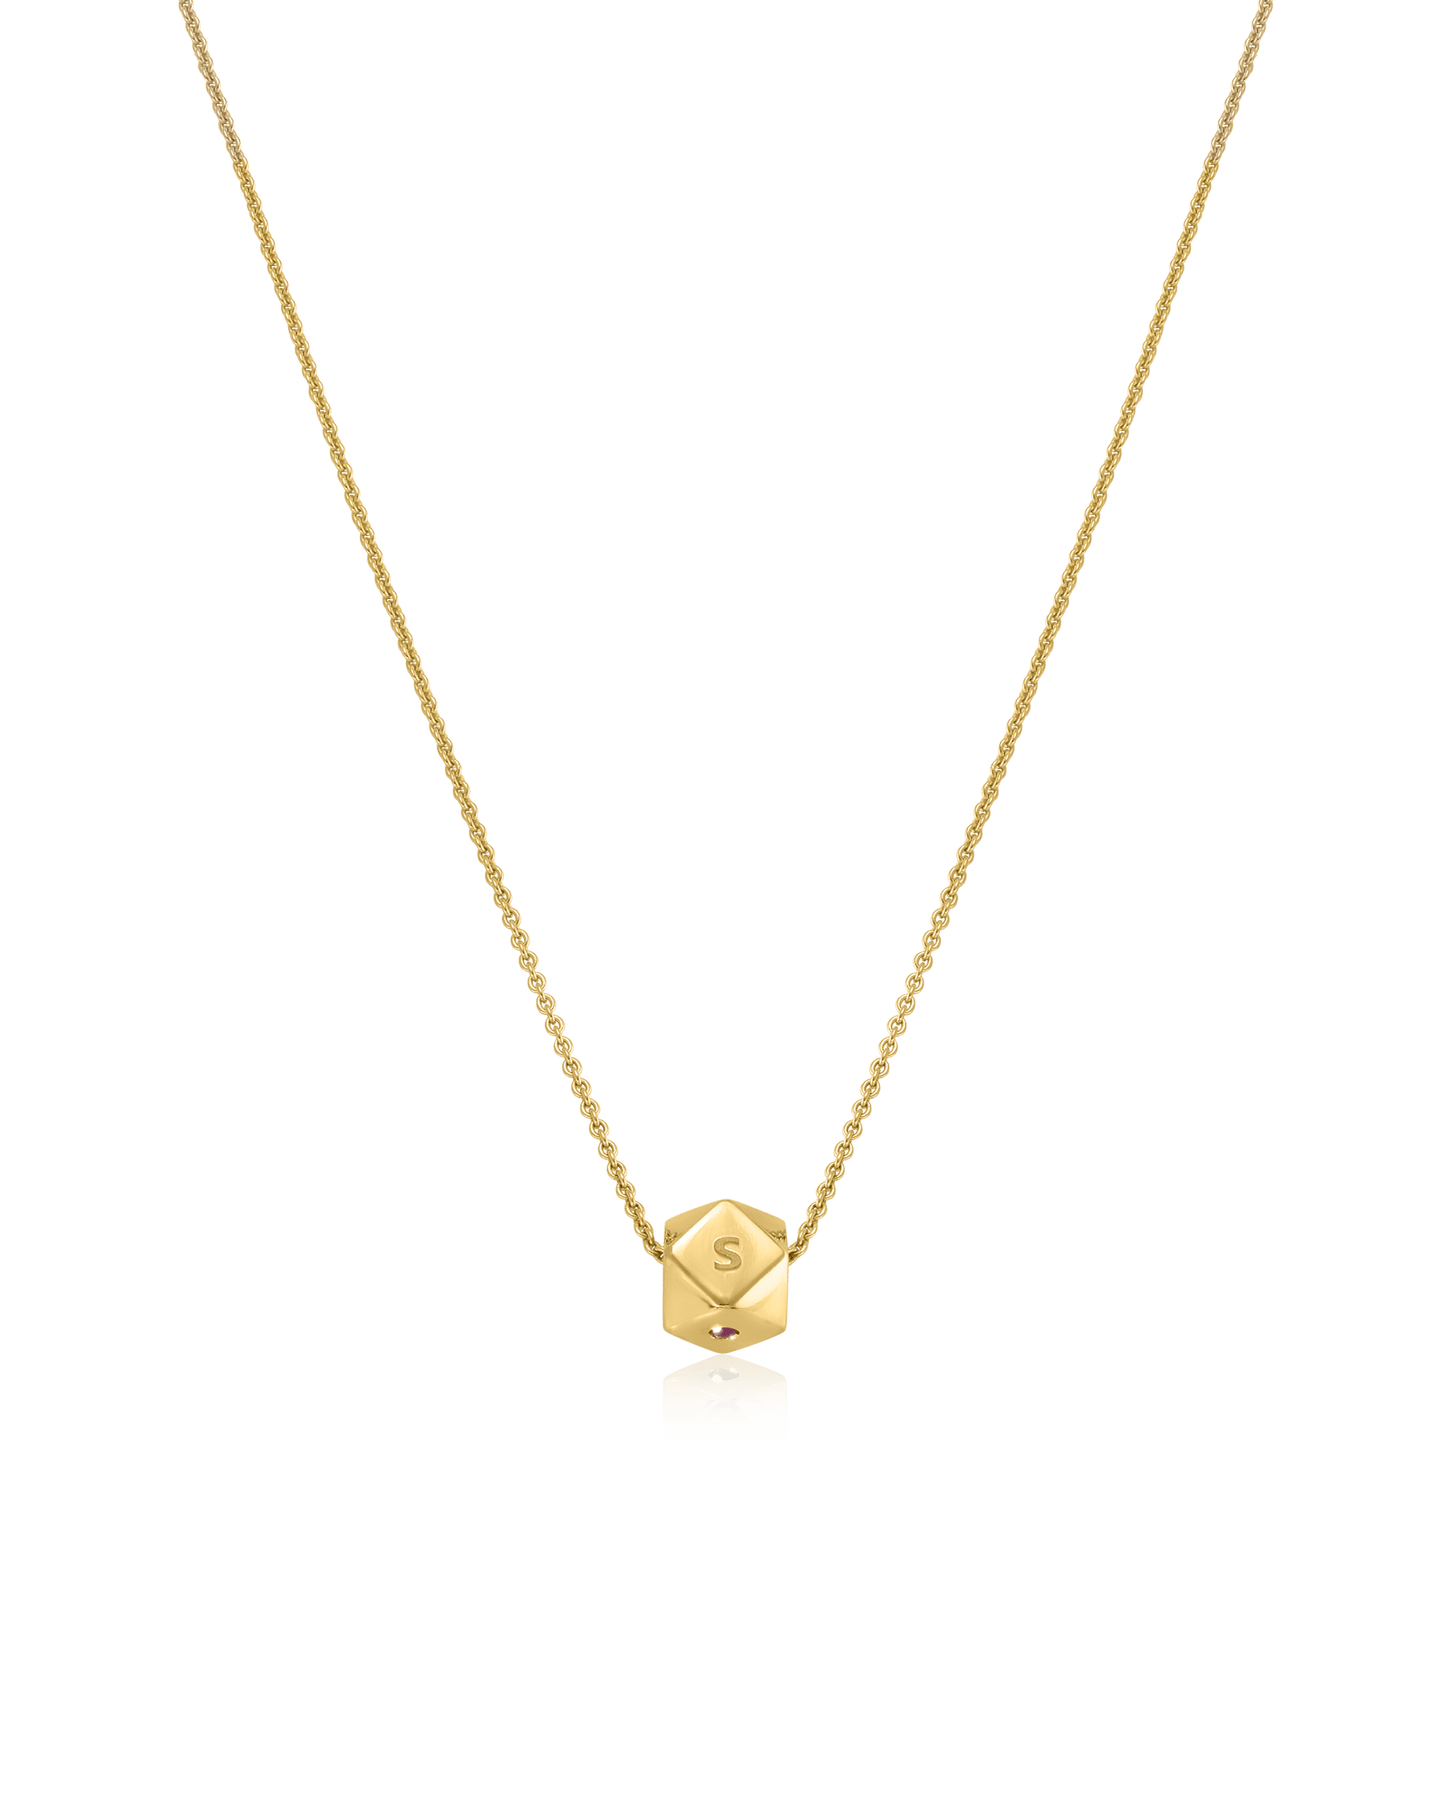 Hedra Necklace - 18K Gold Vermeil Necklaces magal-dev 1 Charm 16”+2” extender 